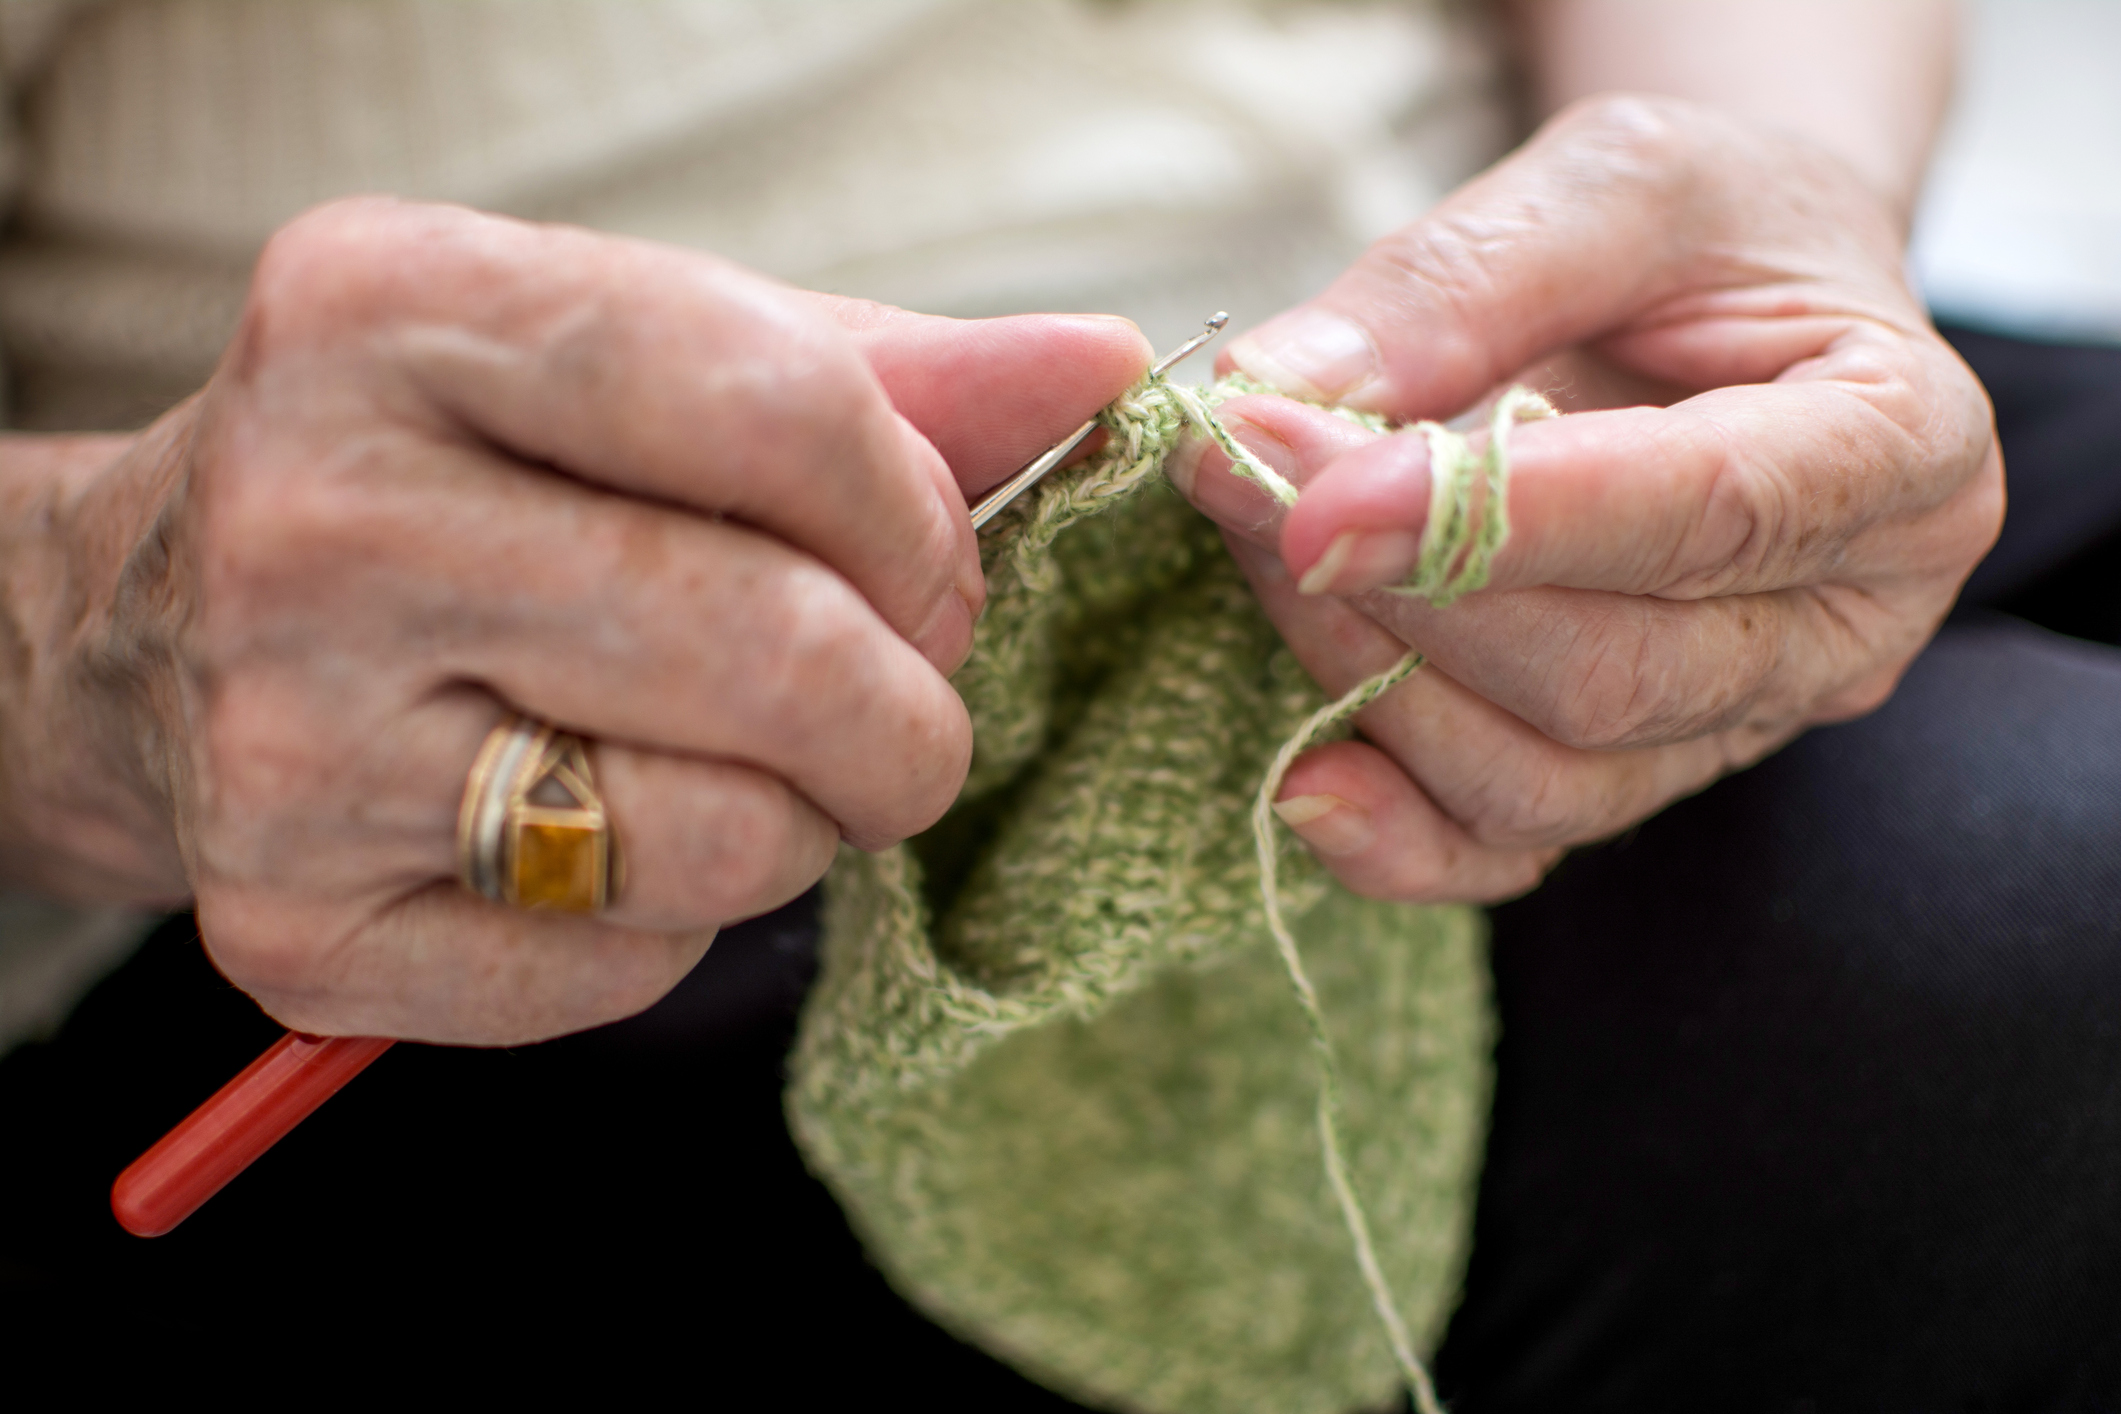 A woman crocheting